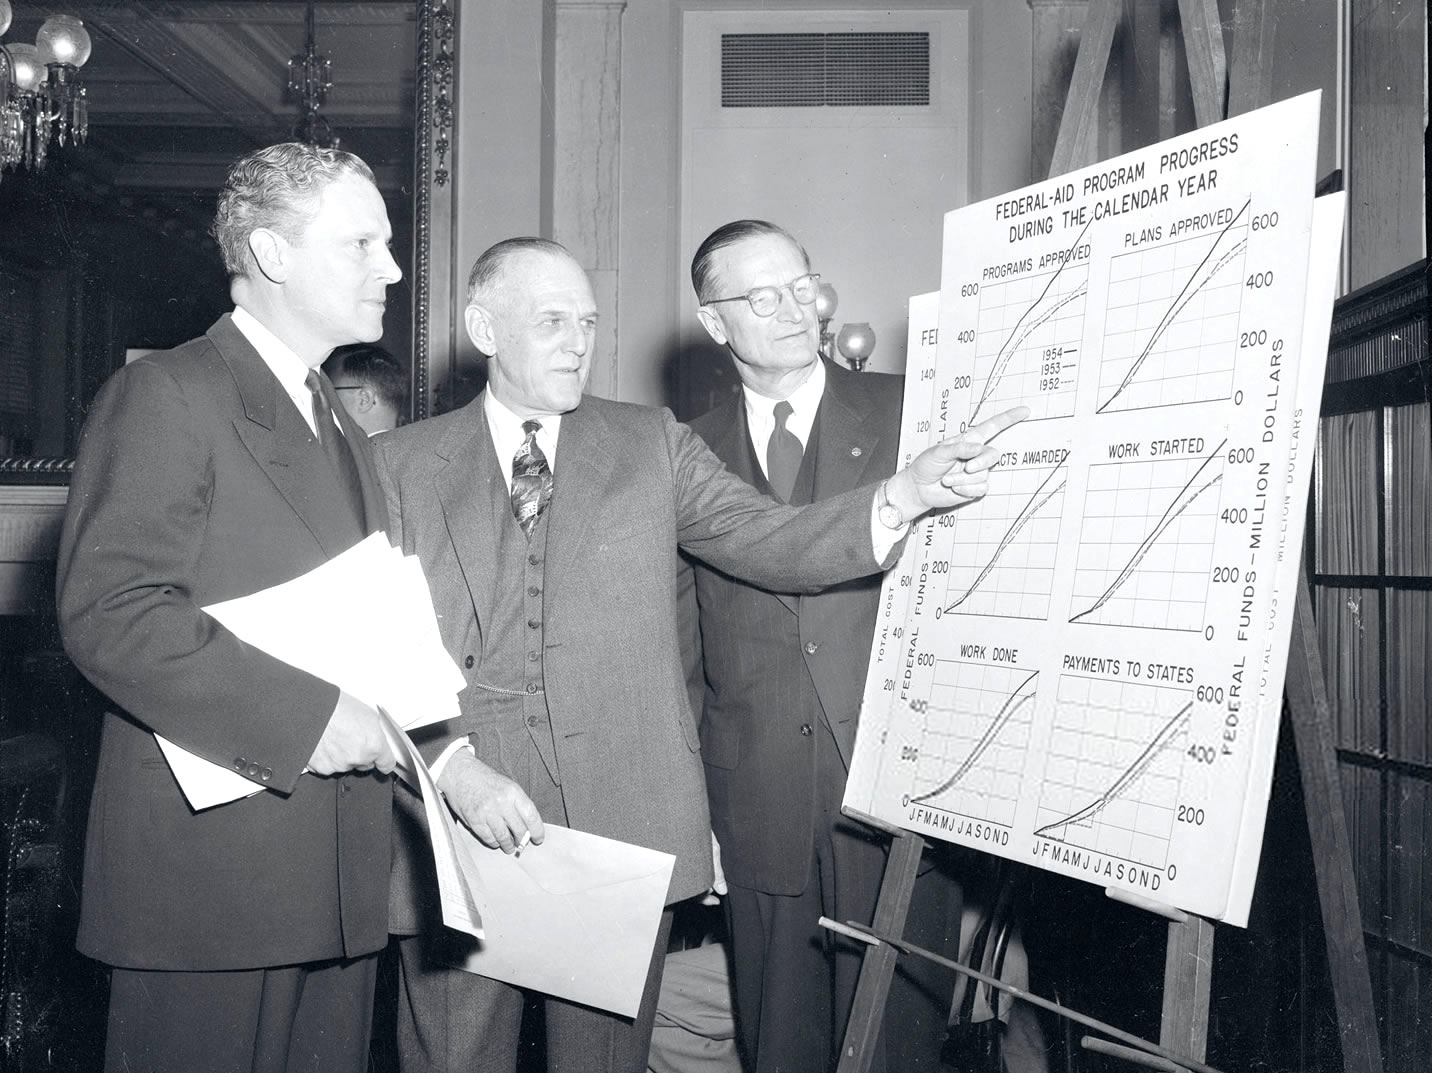 Francis V. du Pont pointing at a chart while addressing AASHO in November 1954.